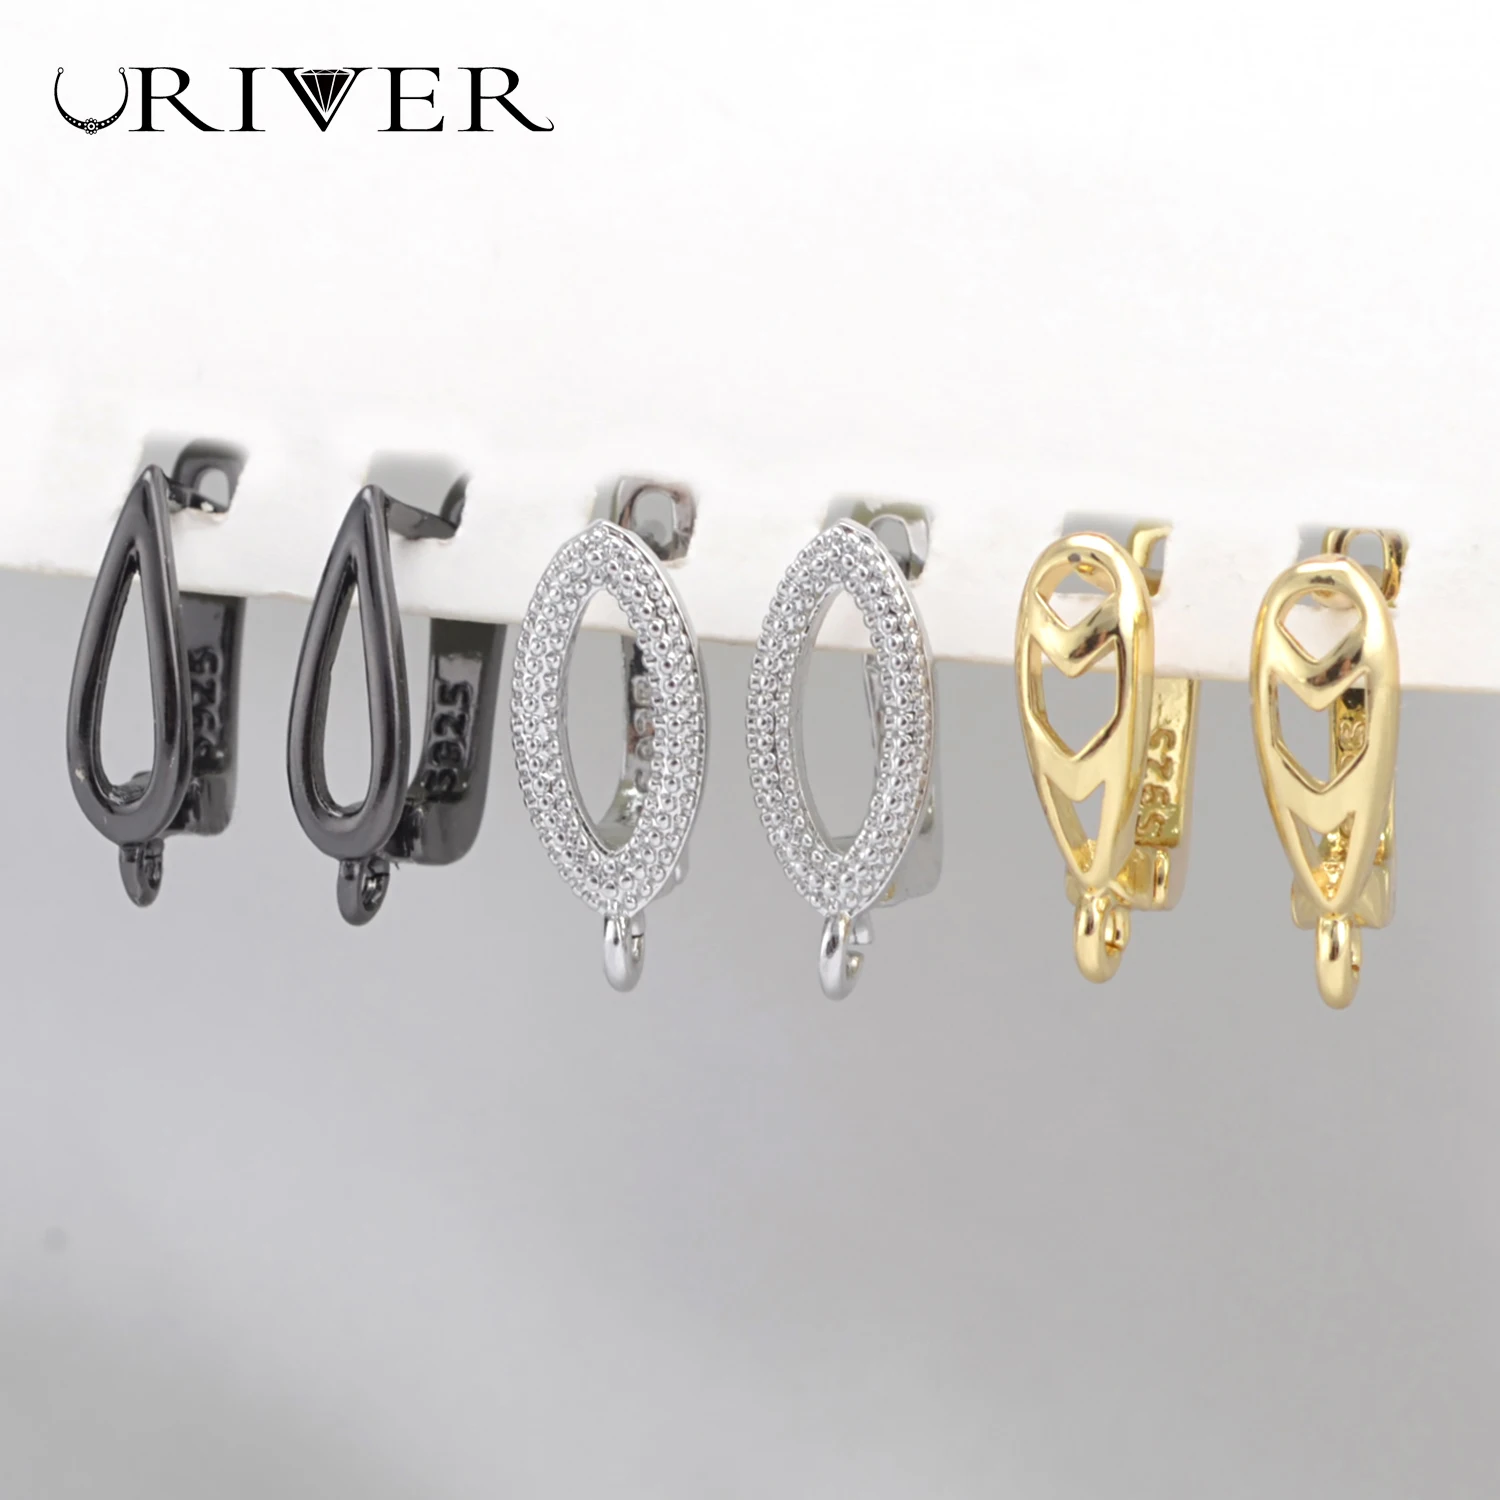 

LJRIVER Hoop Earrings for Women, Pure Metal Brass Trendy Piercing Ear Jewelry, Female Piercing Accessories 6 Pairs Earrings